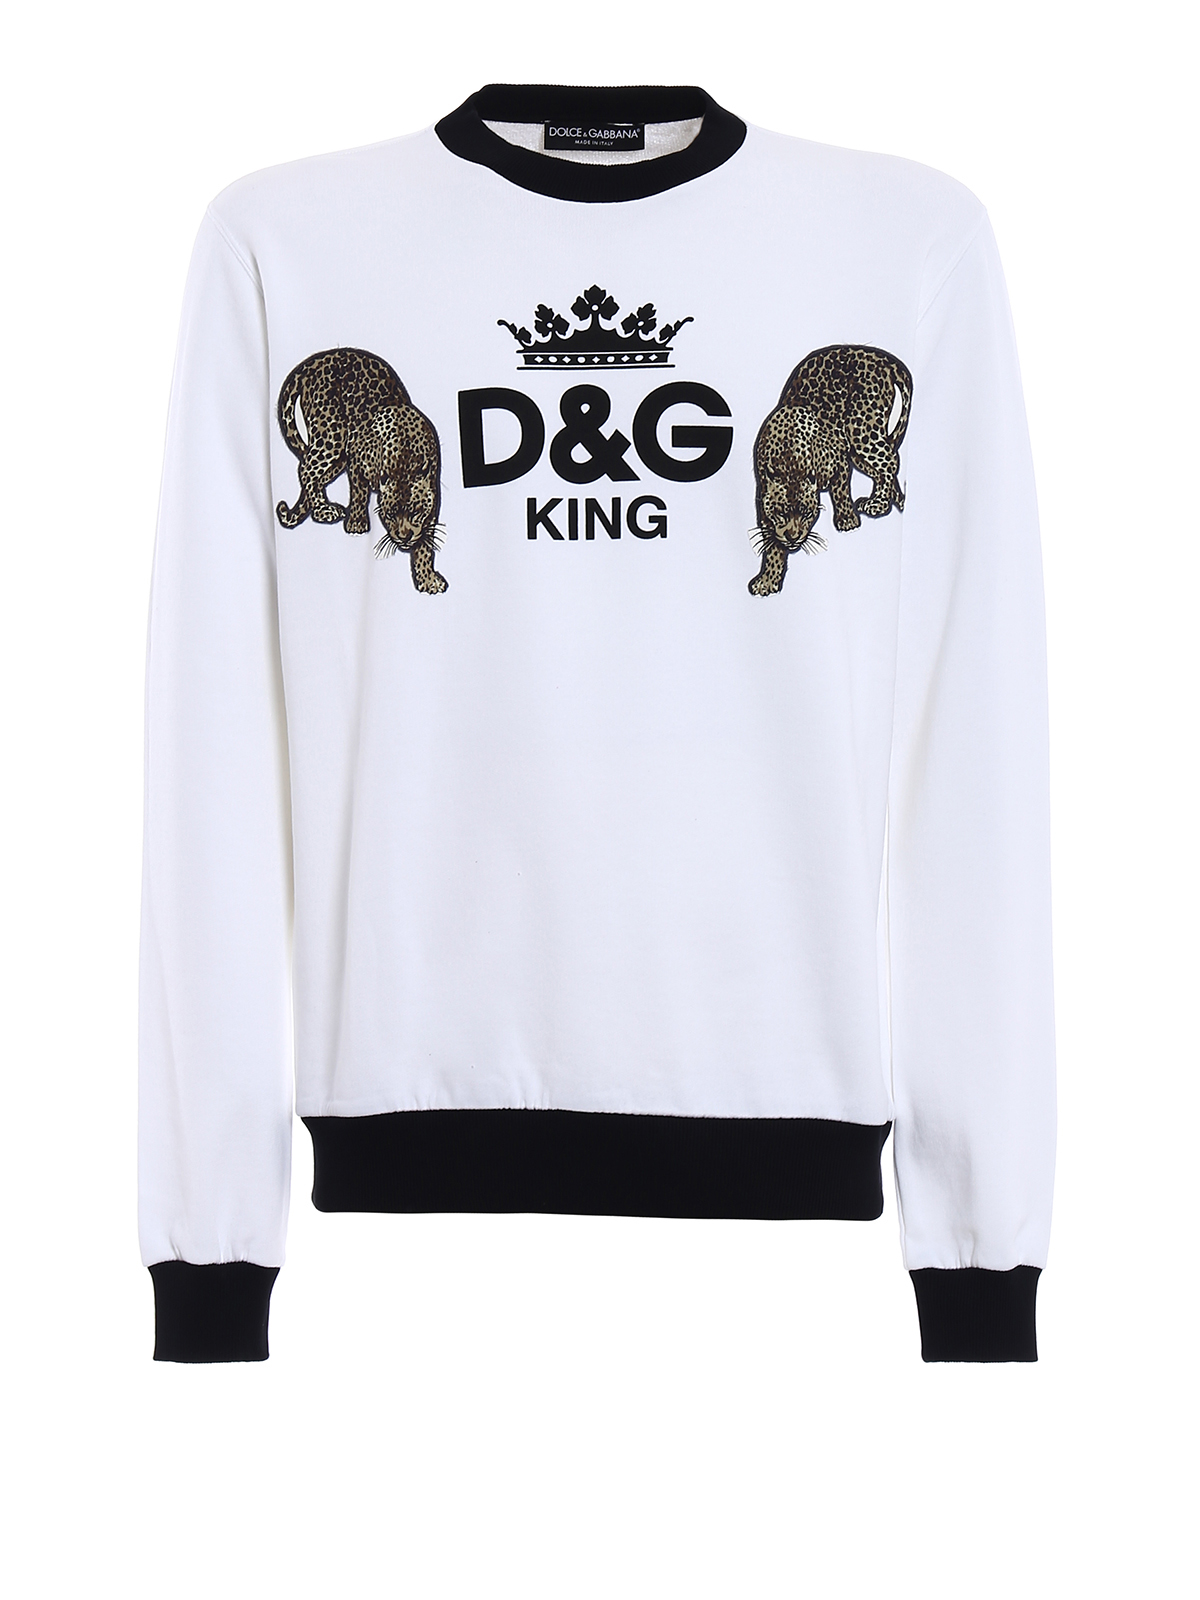 sharp Doctor Taiko belly Sweatshirts & Sweaters Dolce & Gabbana - D&G King print sweatshirt -  G9JQ2ZG7MOJHWI44